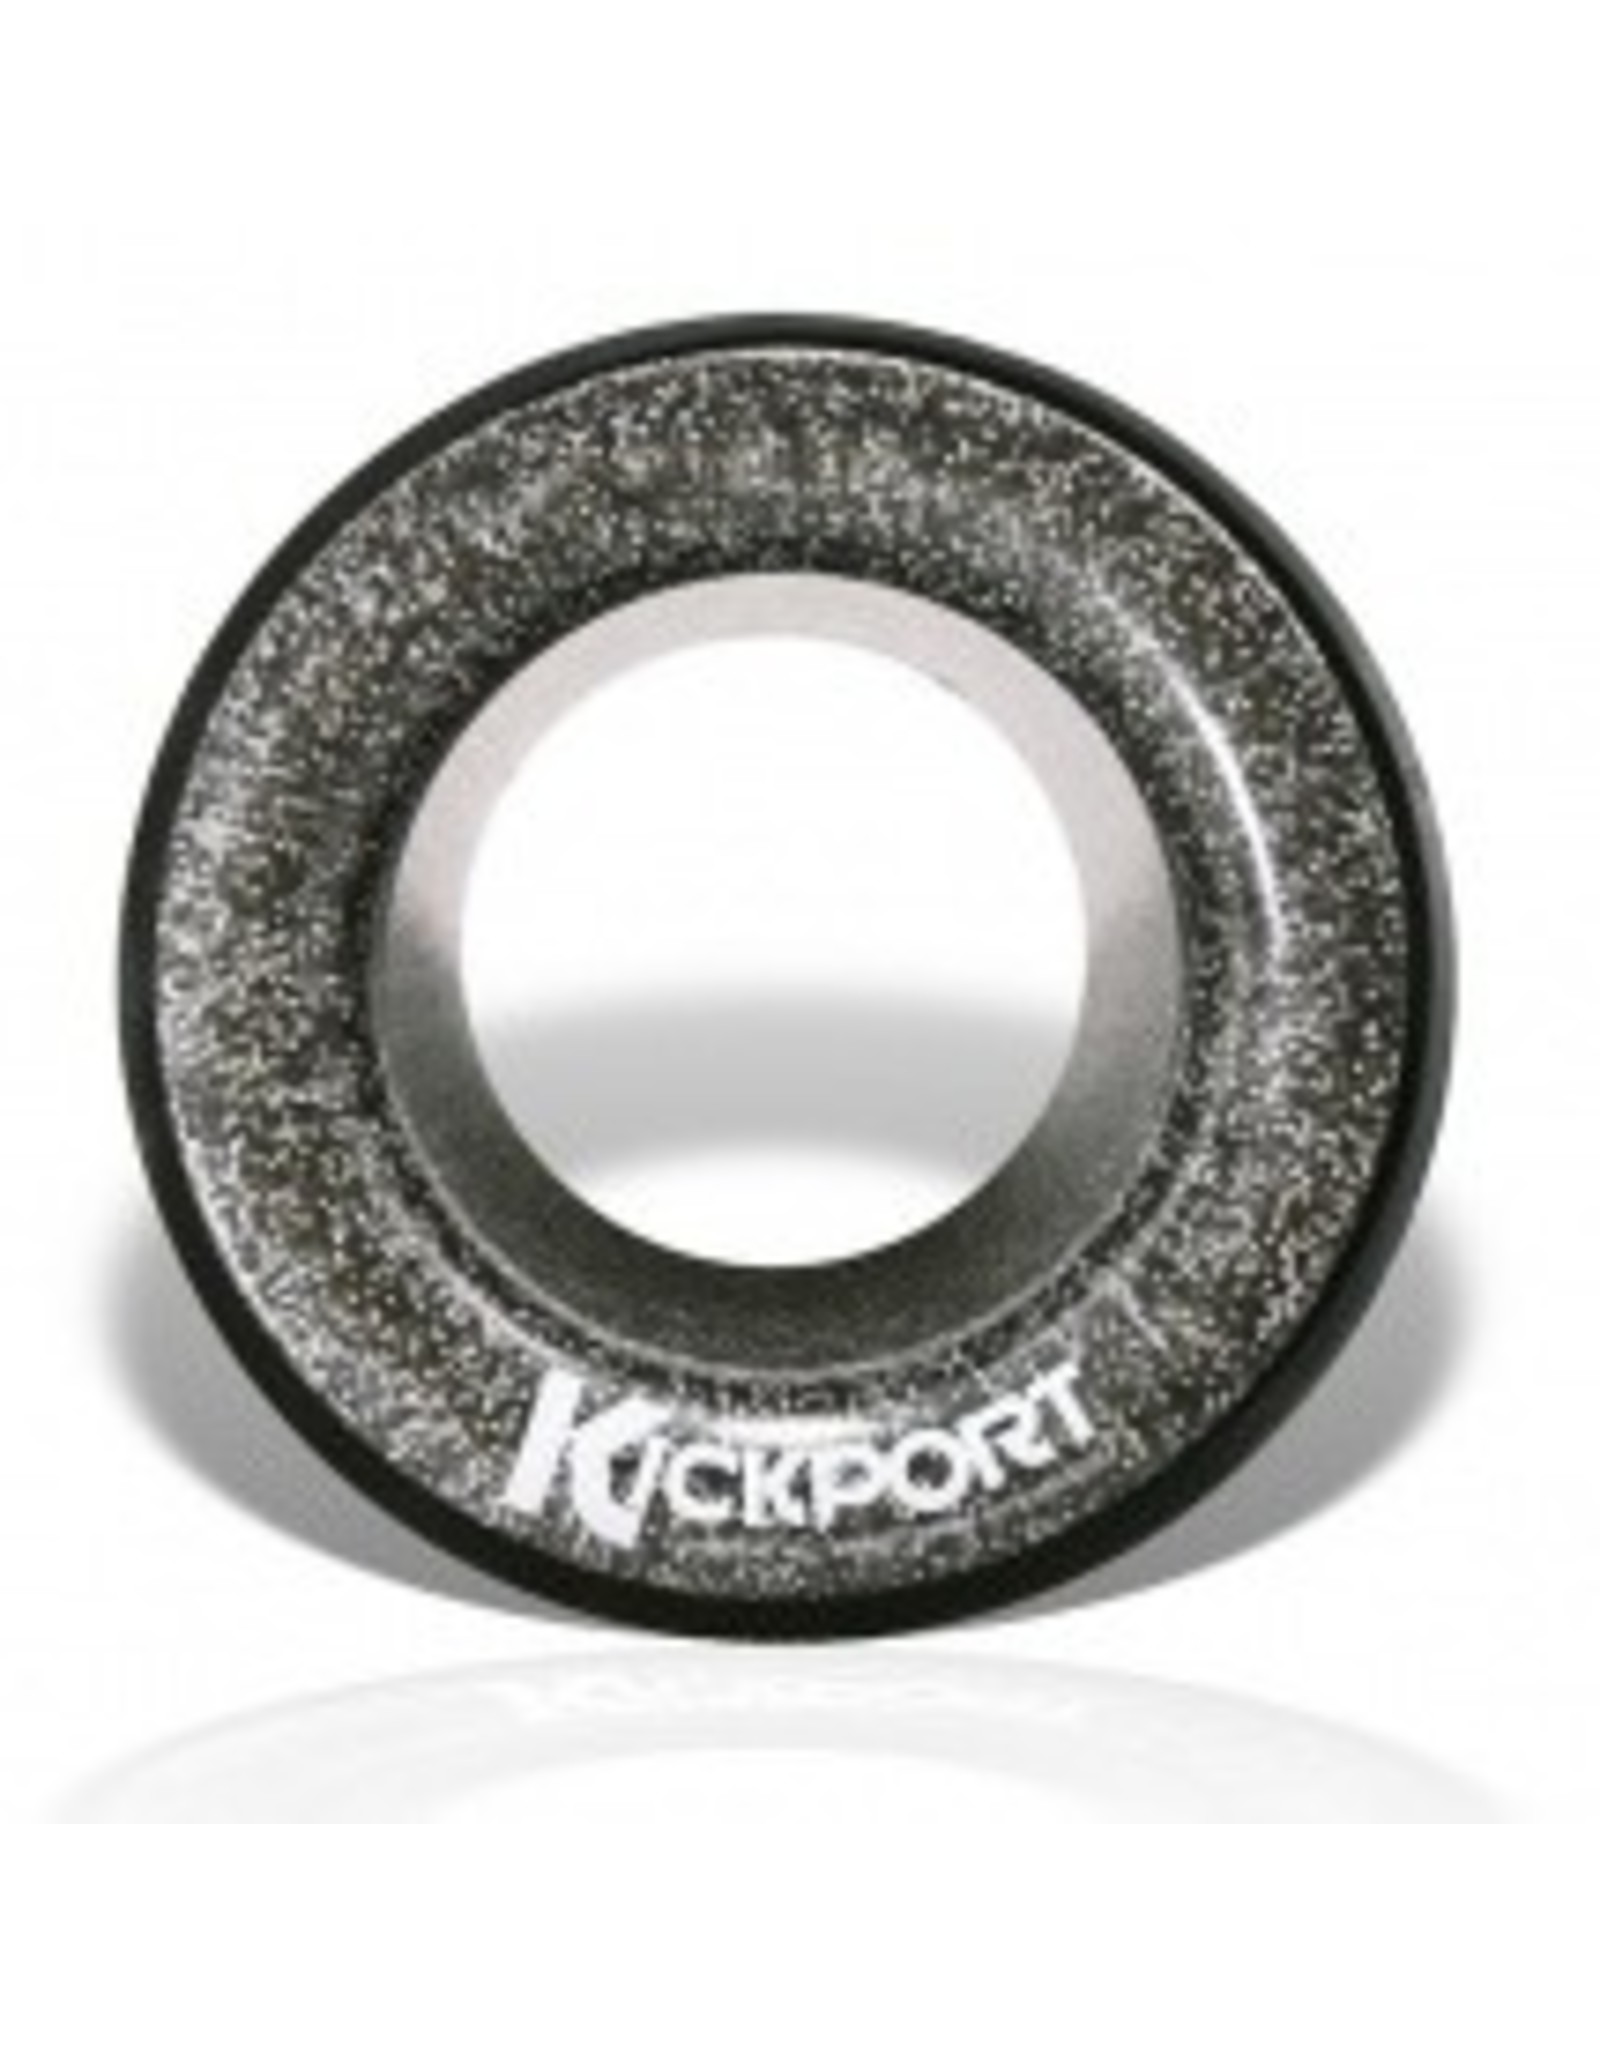 Kickport  KP2_GR GRANITE demping control bass booster